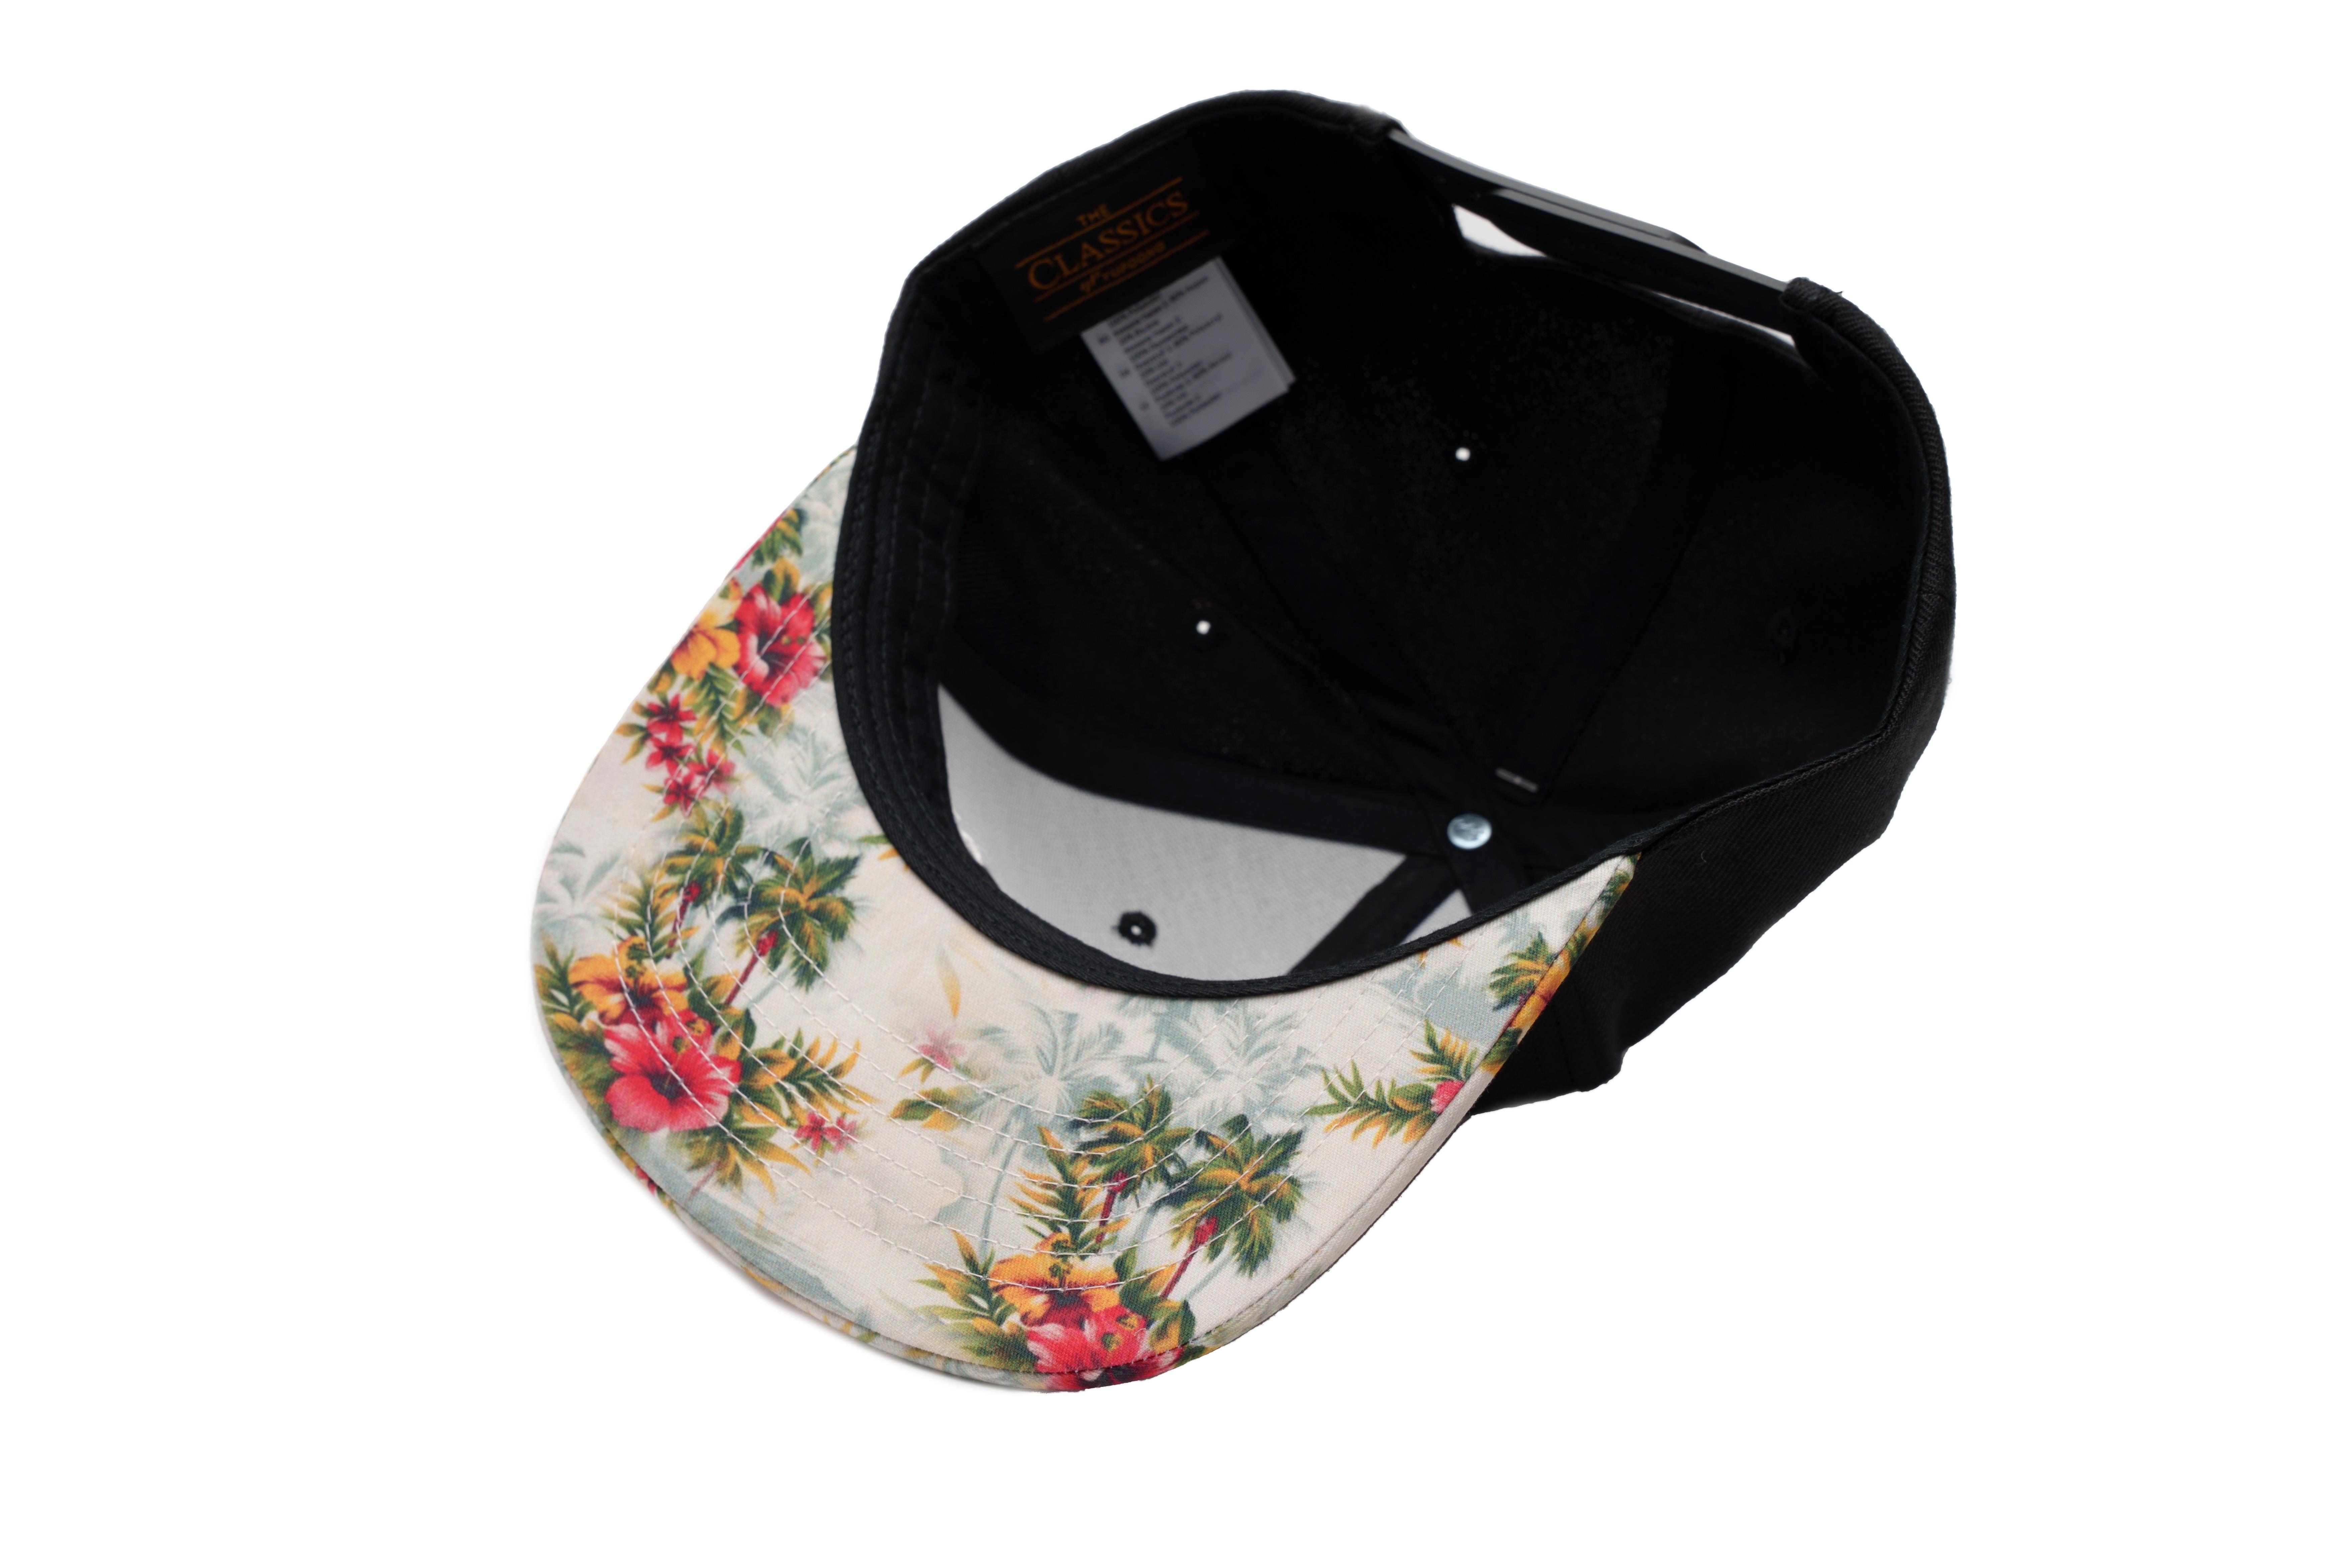 SOLLSO. Floral Snapback Cap, Mint